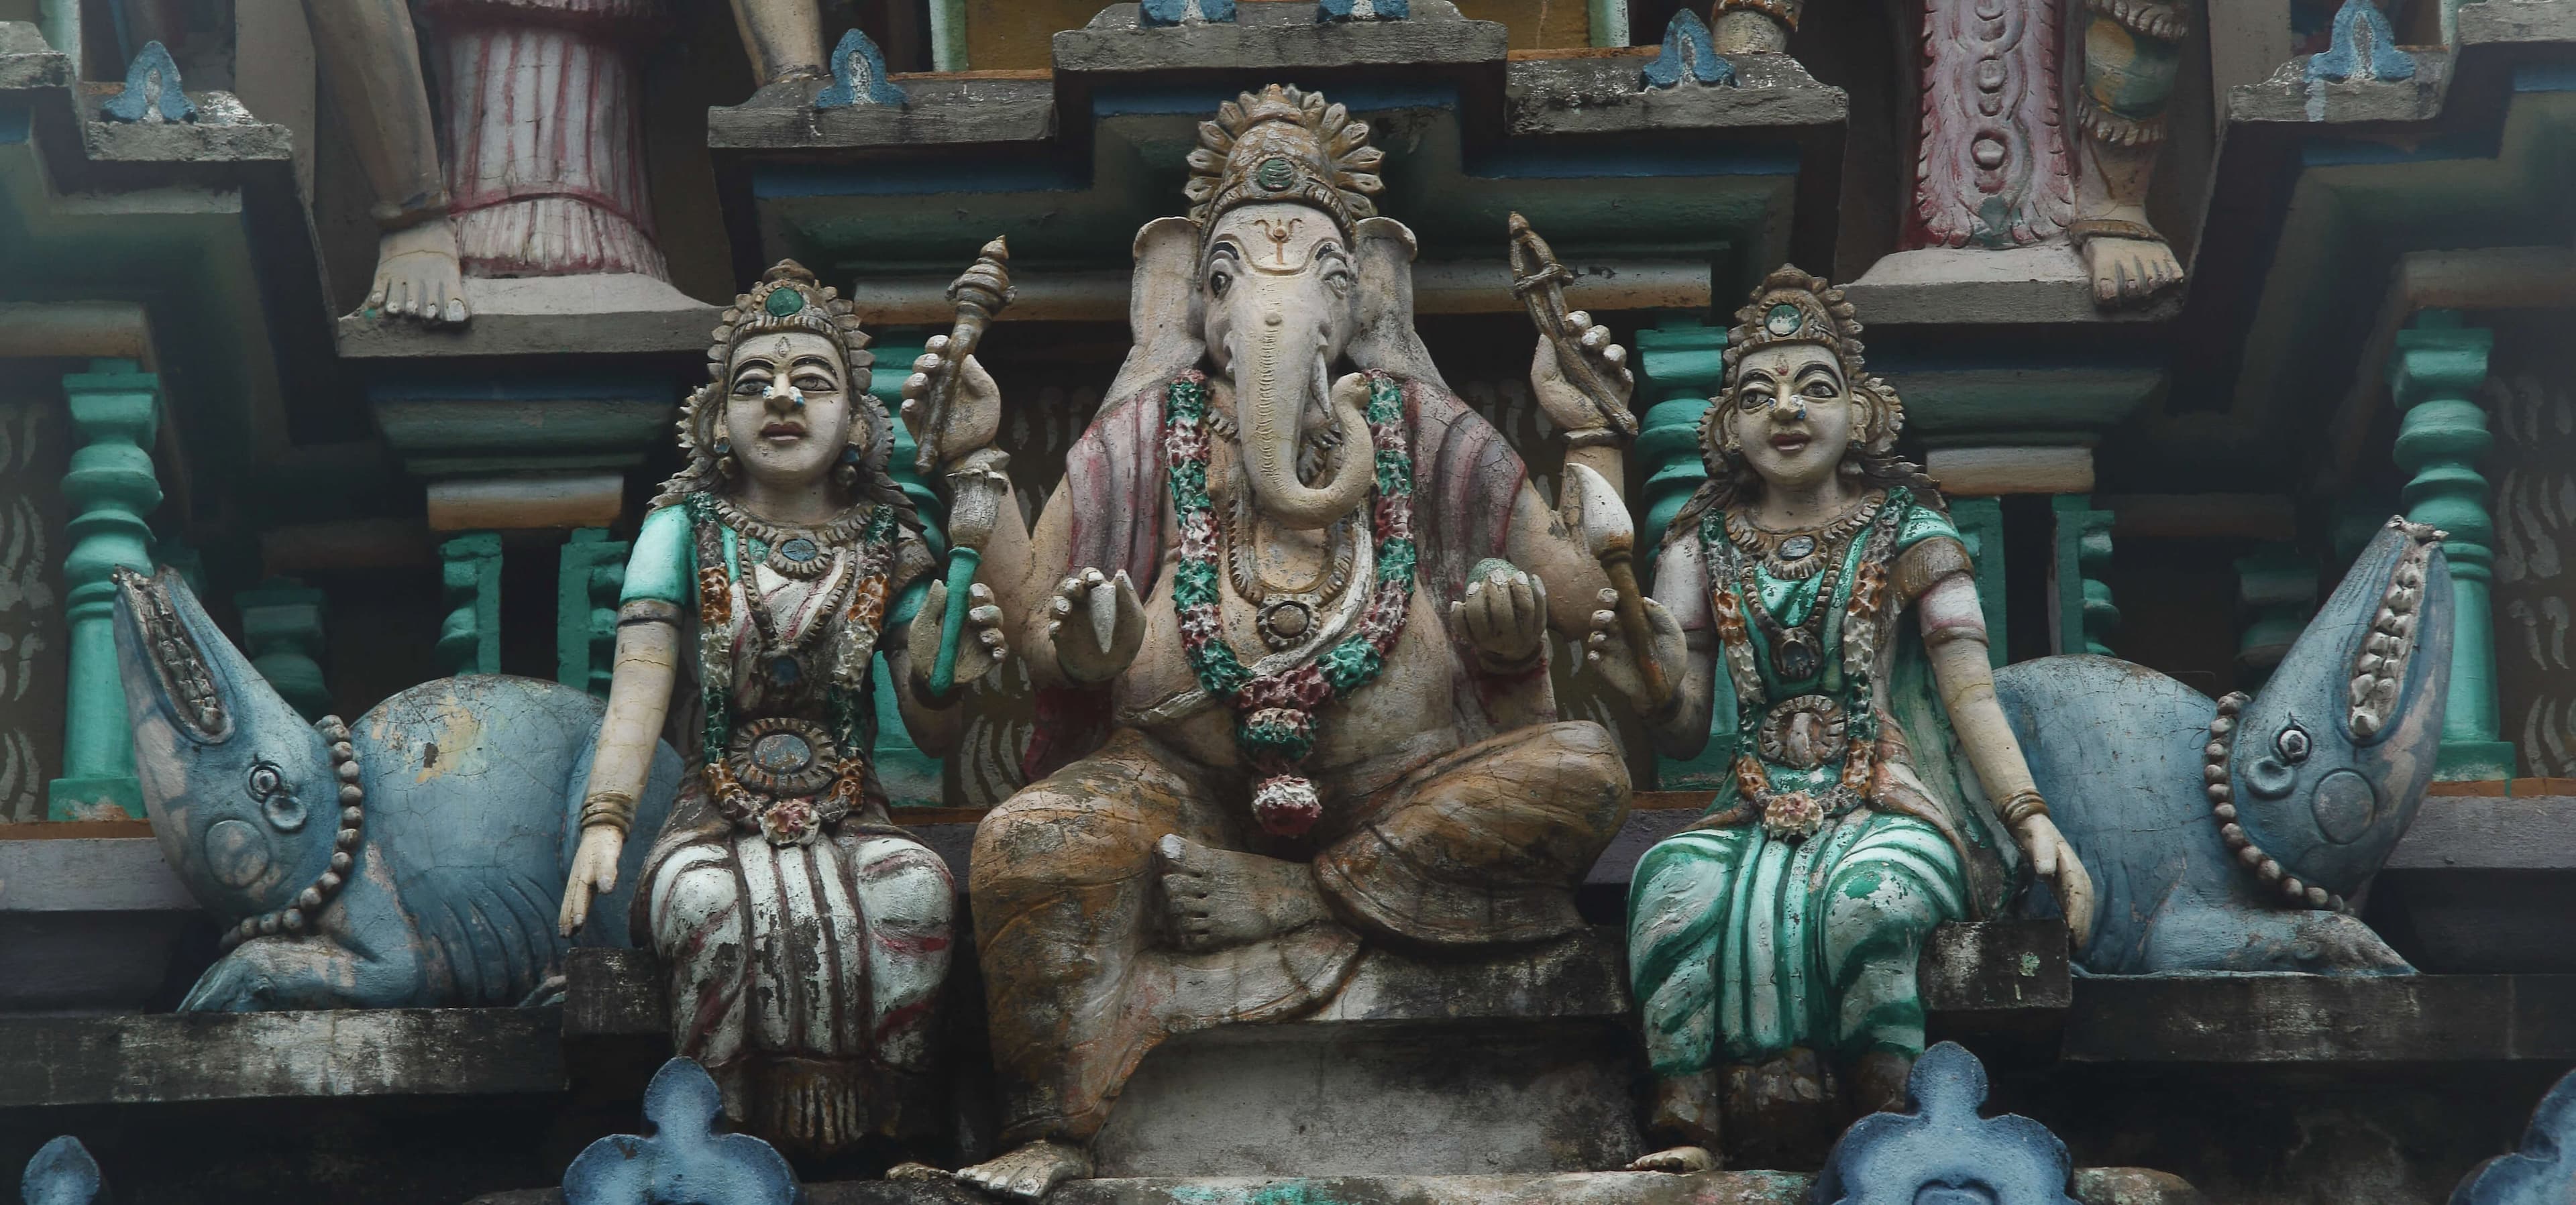 Statue of Ganesha hindu deity with elephant head in Trincomalee, Sri lanka.